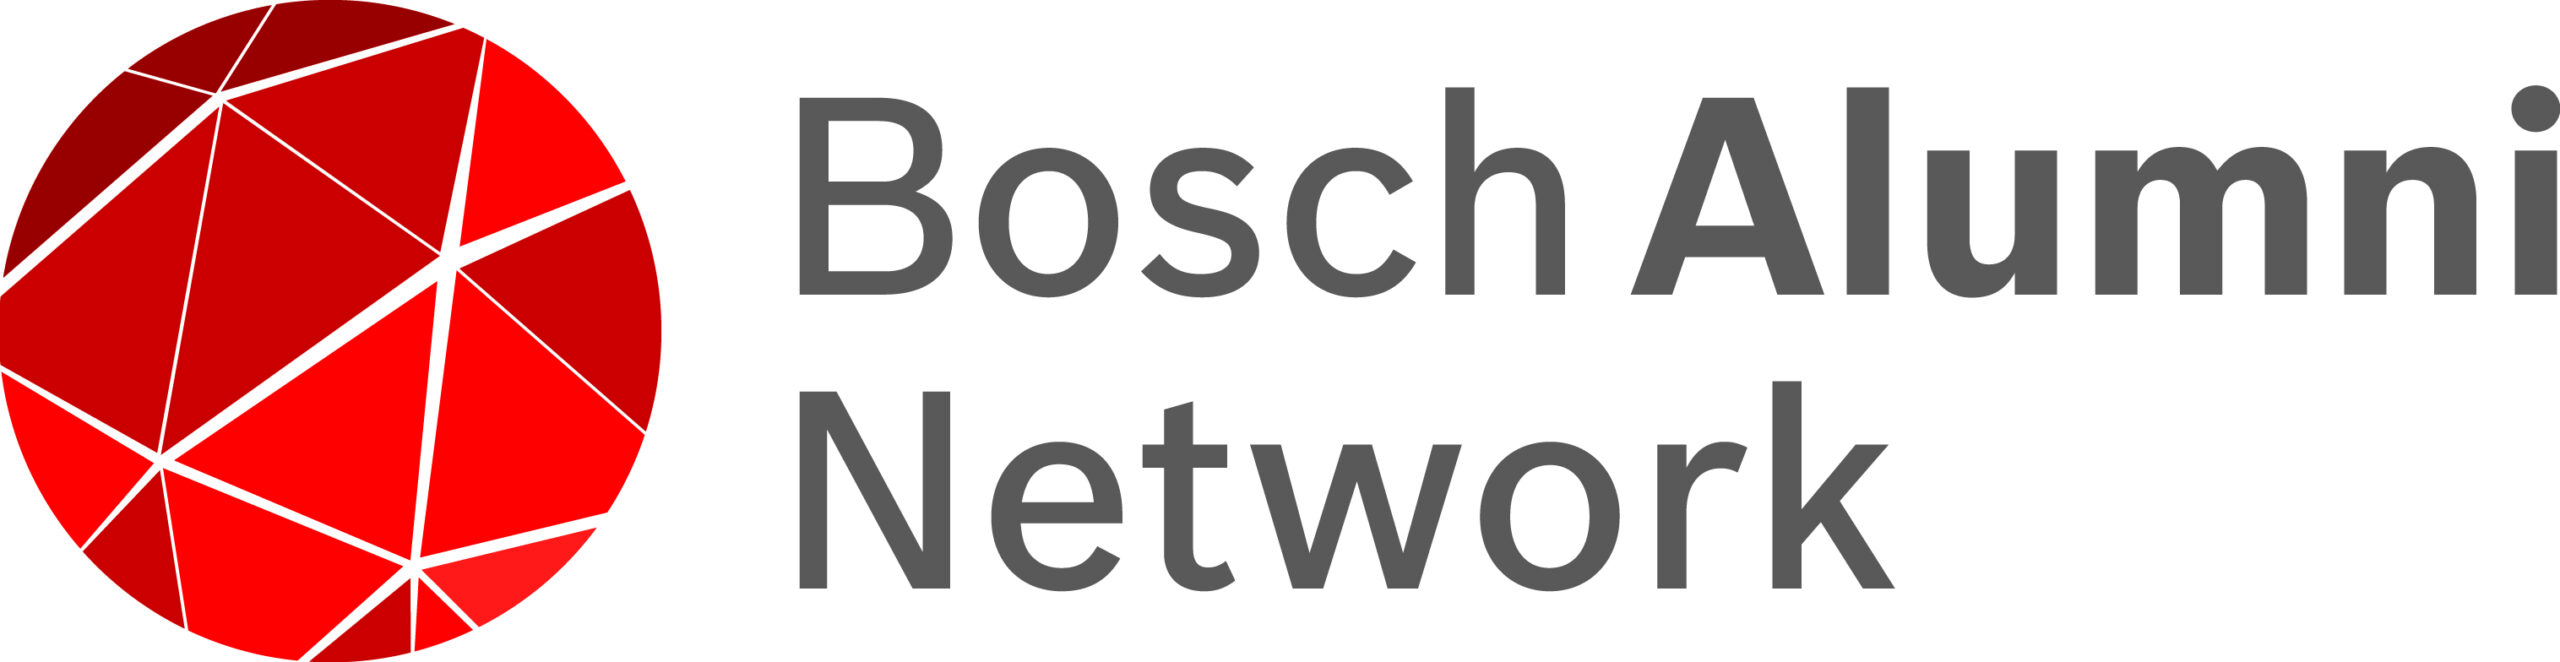 Bosch Alumni Network